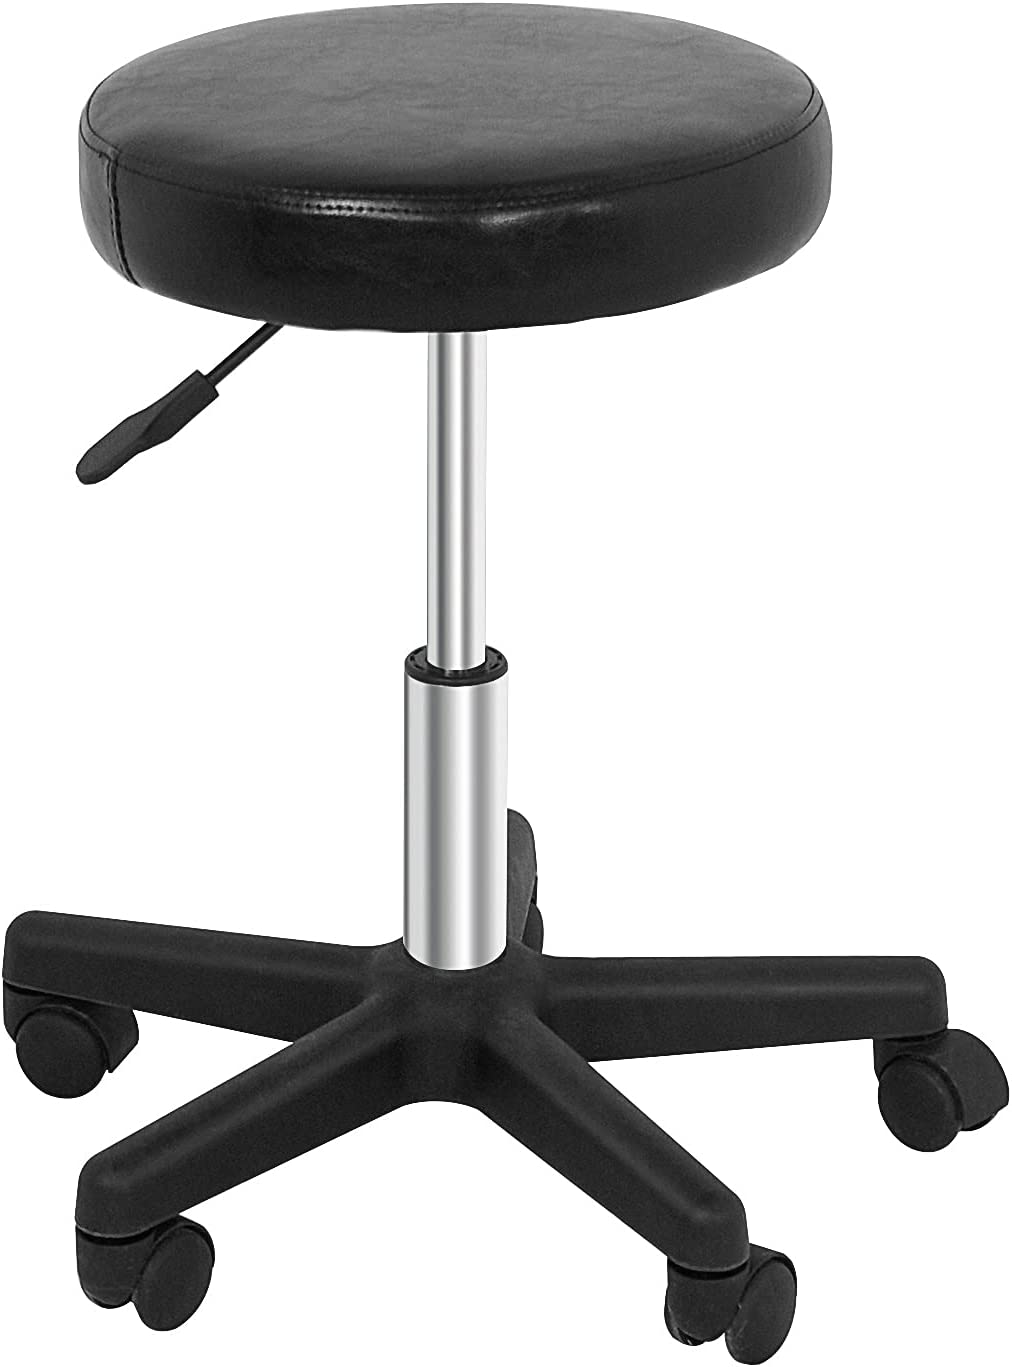 Adjustable Swivel Stool Chair Hydraulic Rolling Stool for Beauty Salon Massage Spa Medical Tattoo Drafting, Black